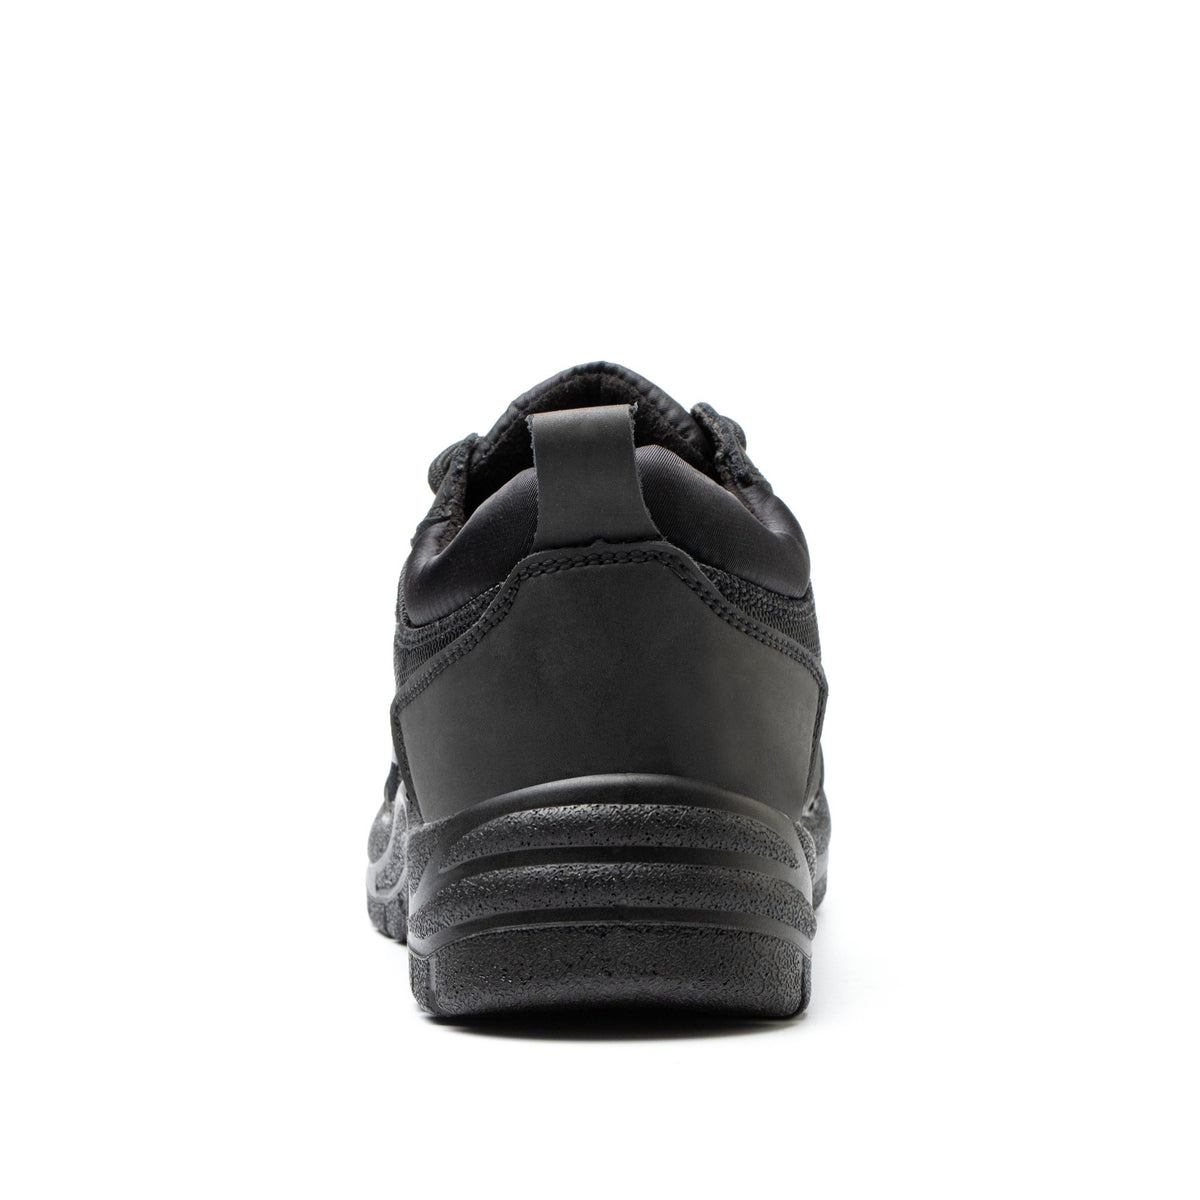 9K Black - Indestructible Shoes